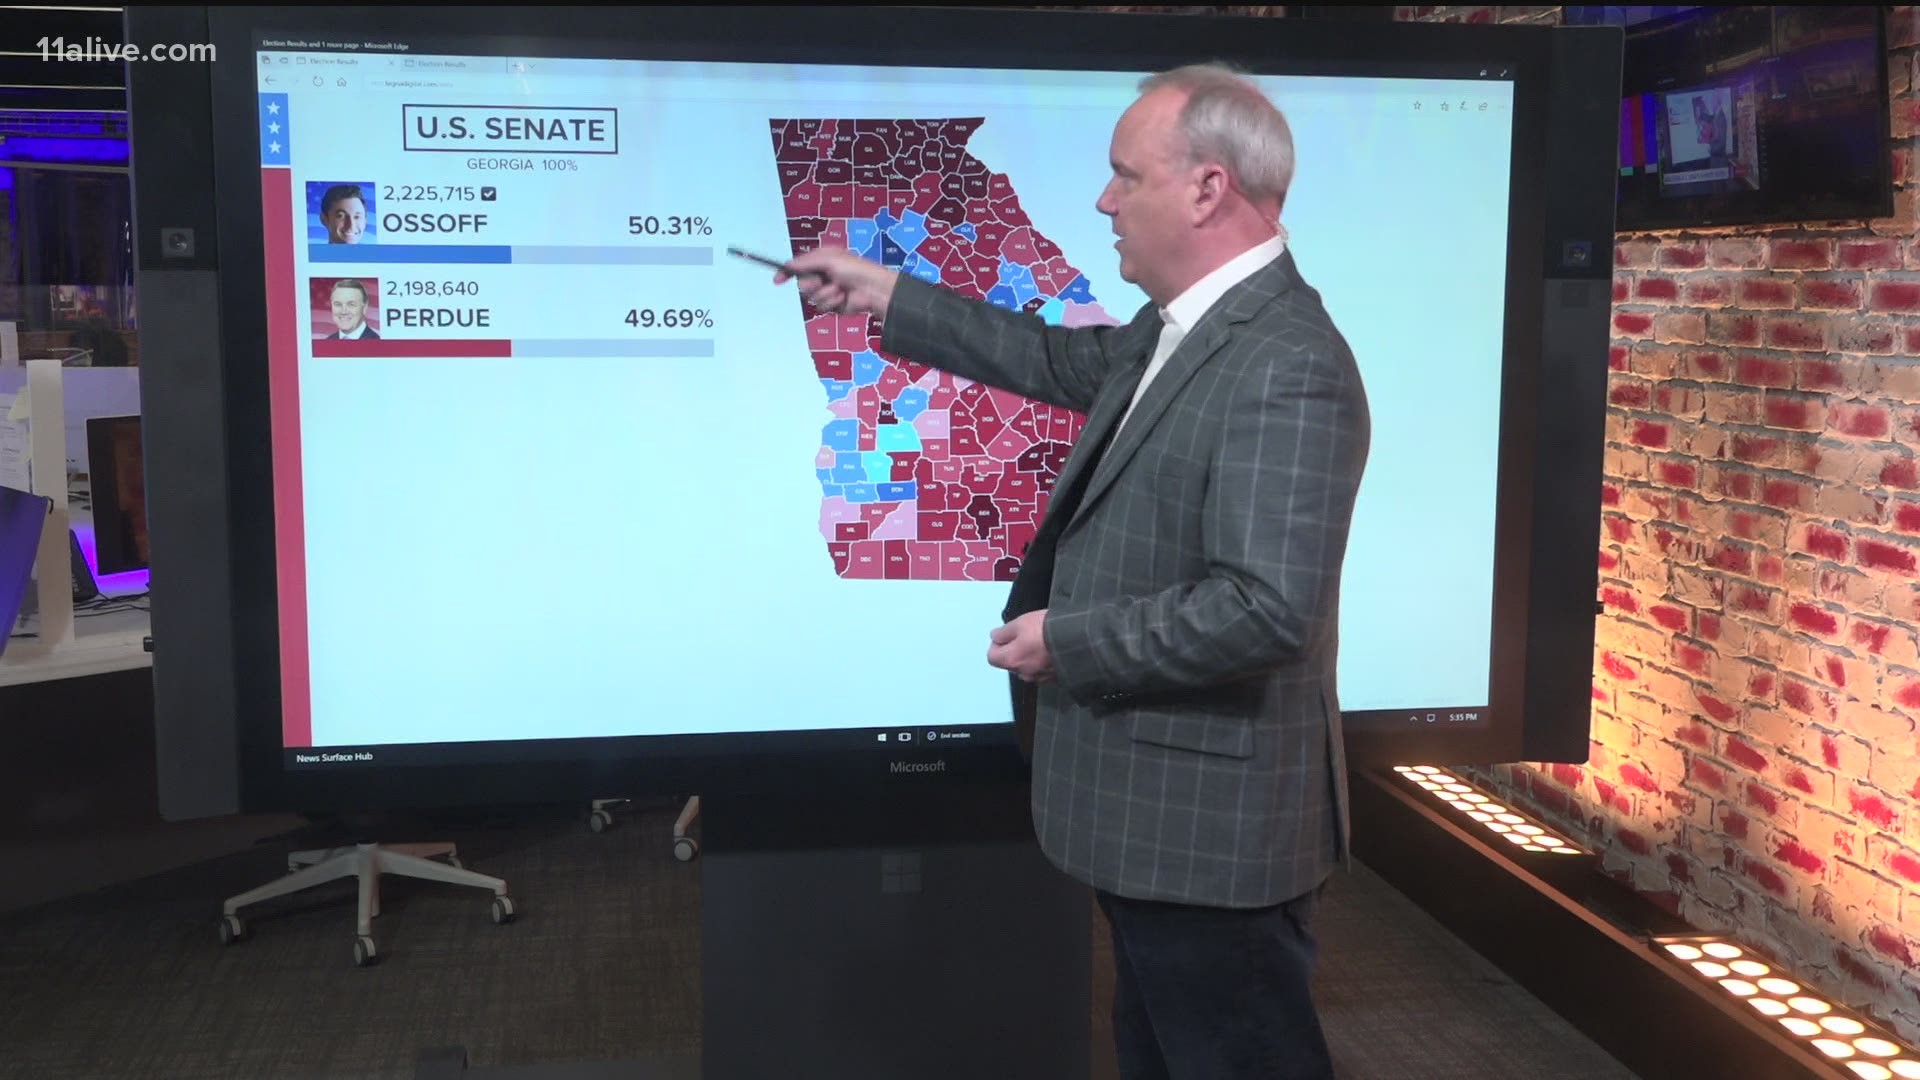 Democrats Jon Ossoff and Raphael Warnock both won their seats - giving the party the Senate majority.